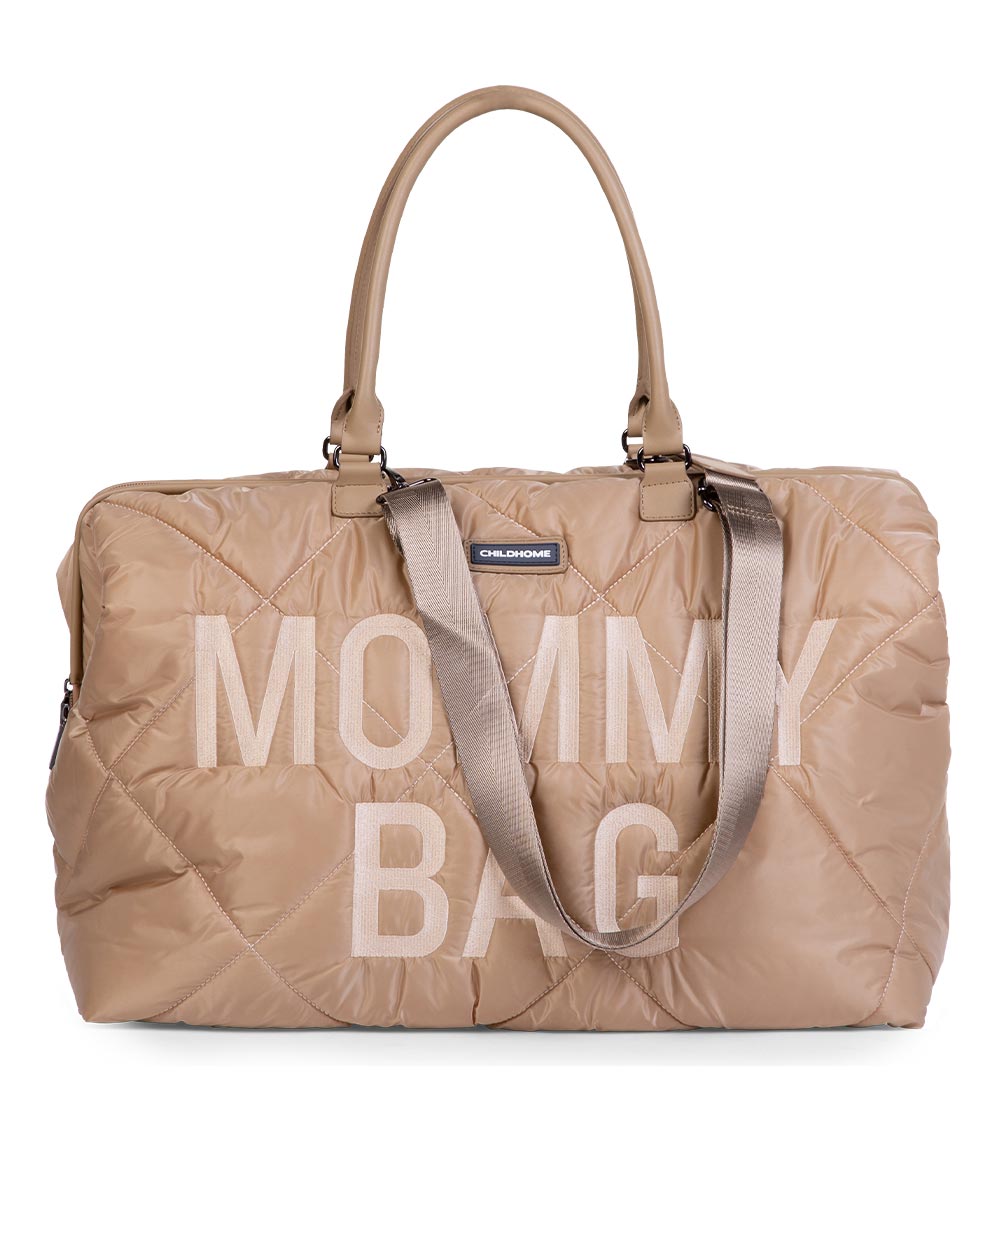 Borsa Cambio "Mommy Bag!" - Beige quilt